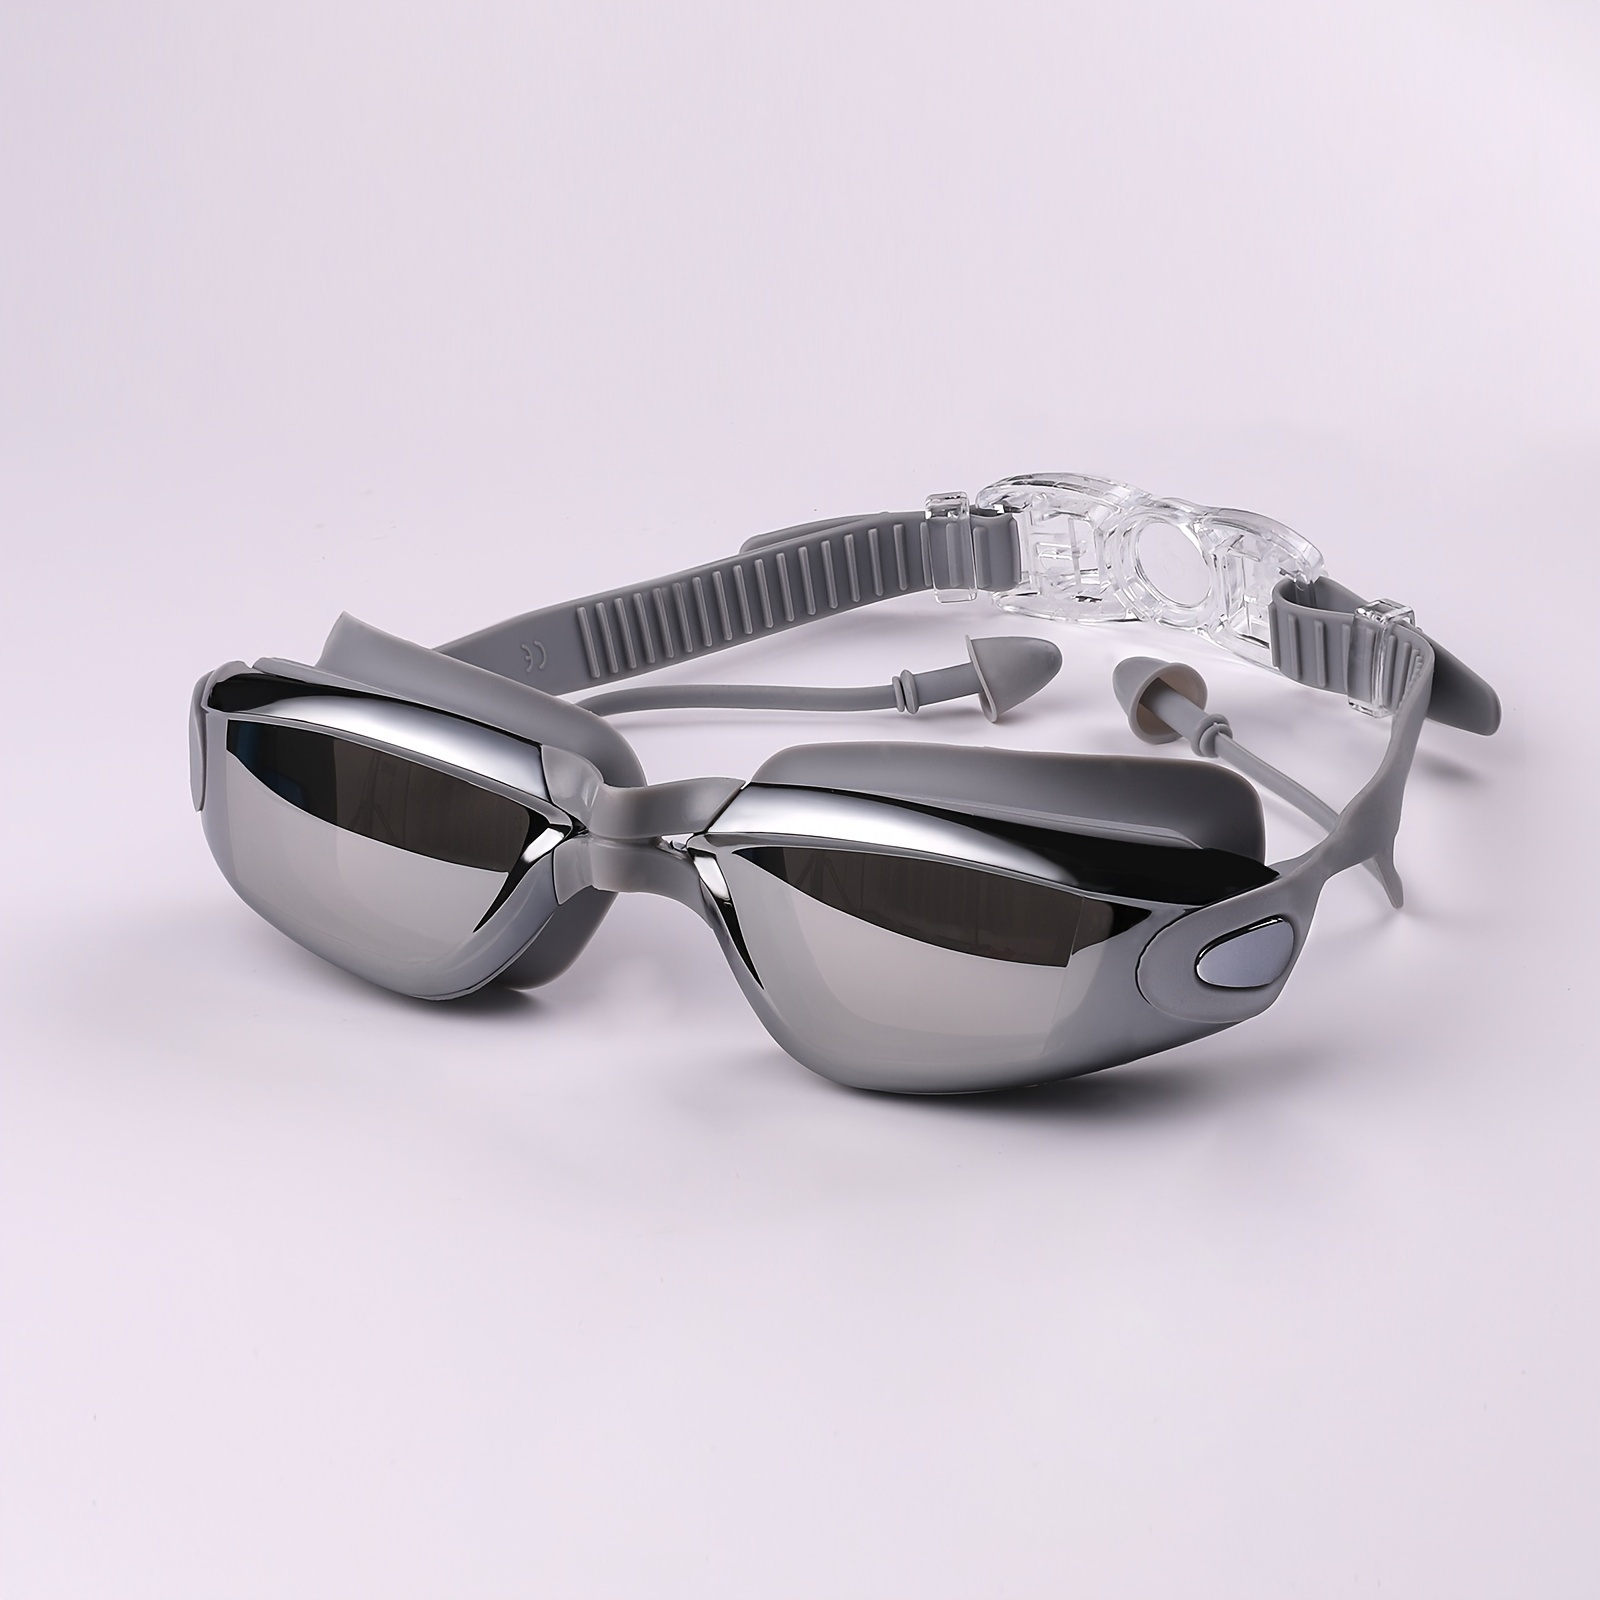 

1pc Electroplated Swimming Goggles: Waterproof, Anti-fog Glasses & Earplugs - Perfect For Any Swim!